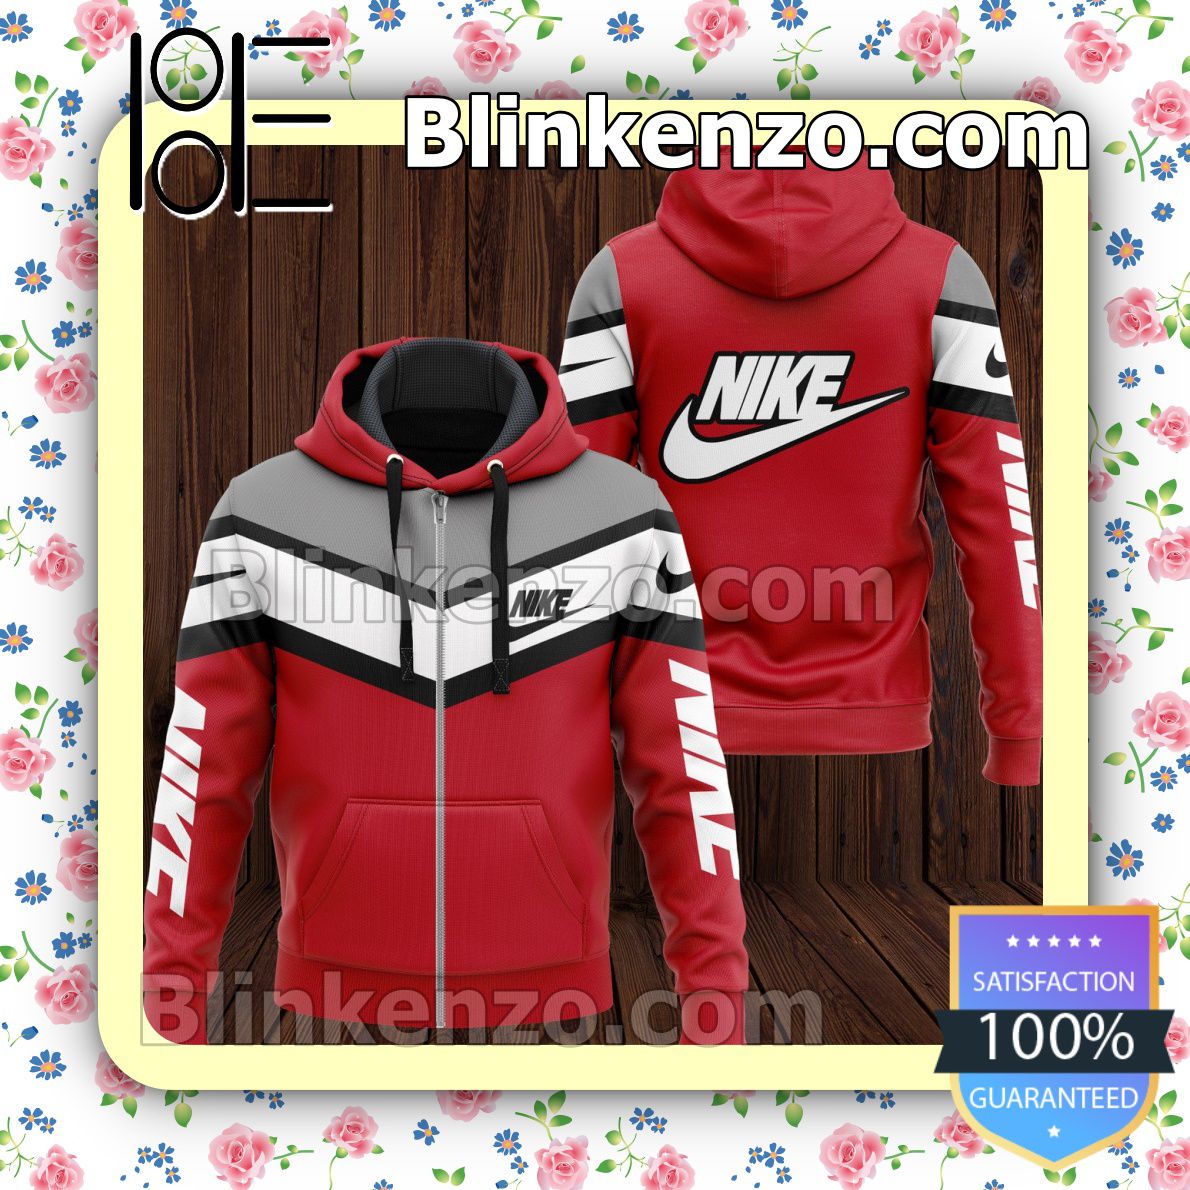 Buy In US Nike Mix Colors Red Full-Zip Hooded Fleece Sweatshirt